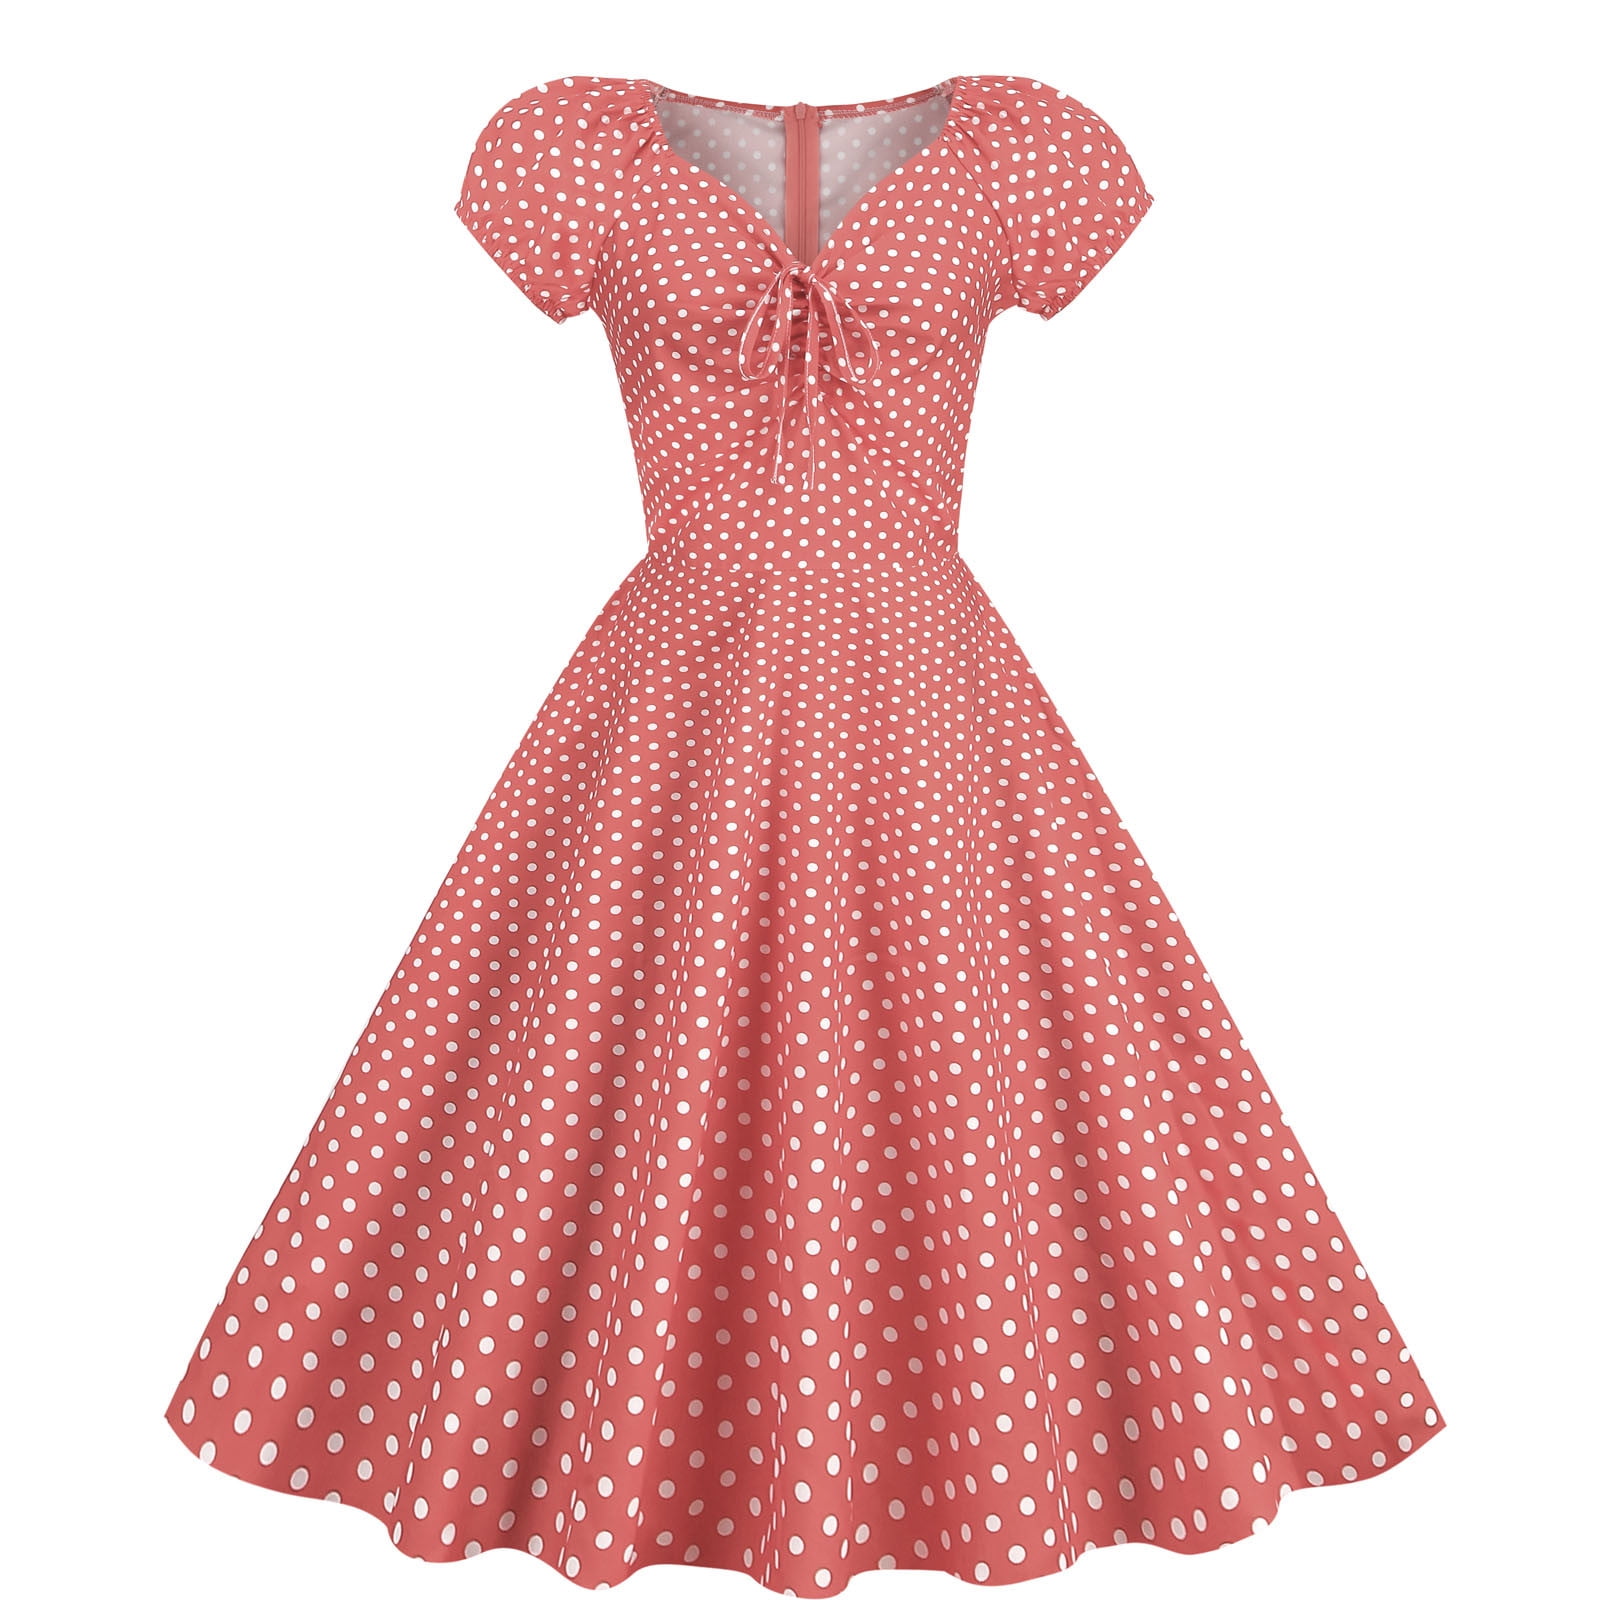 sixties dresses